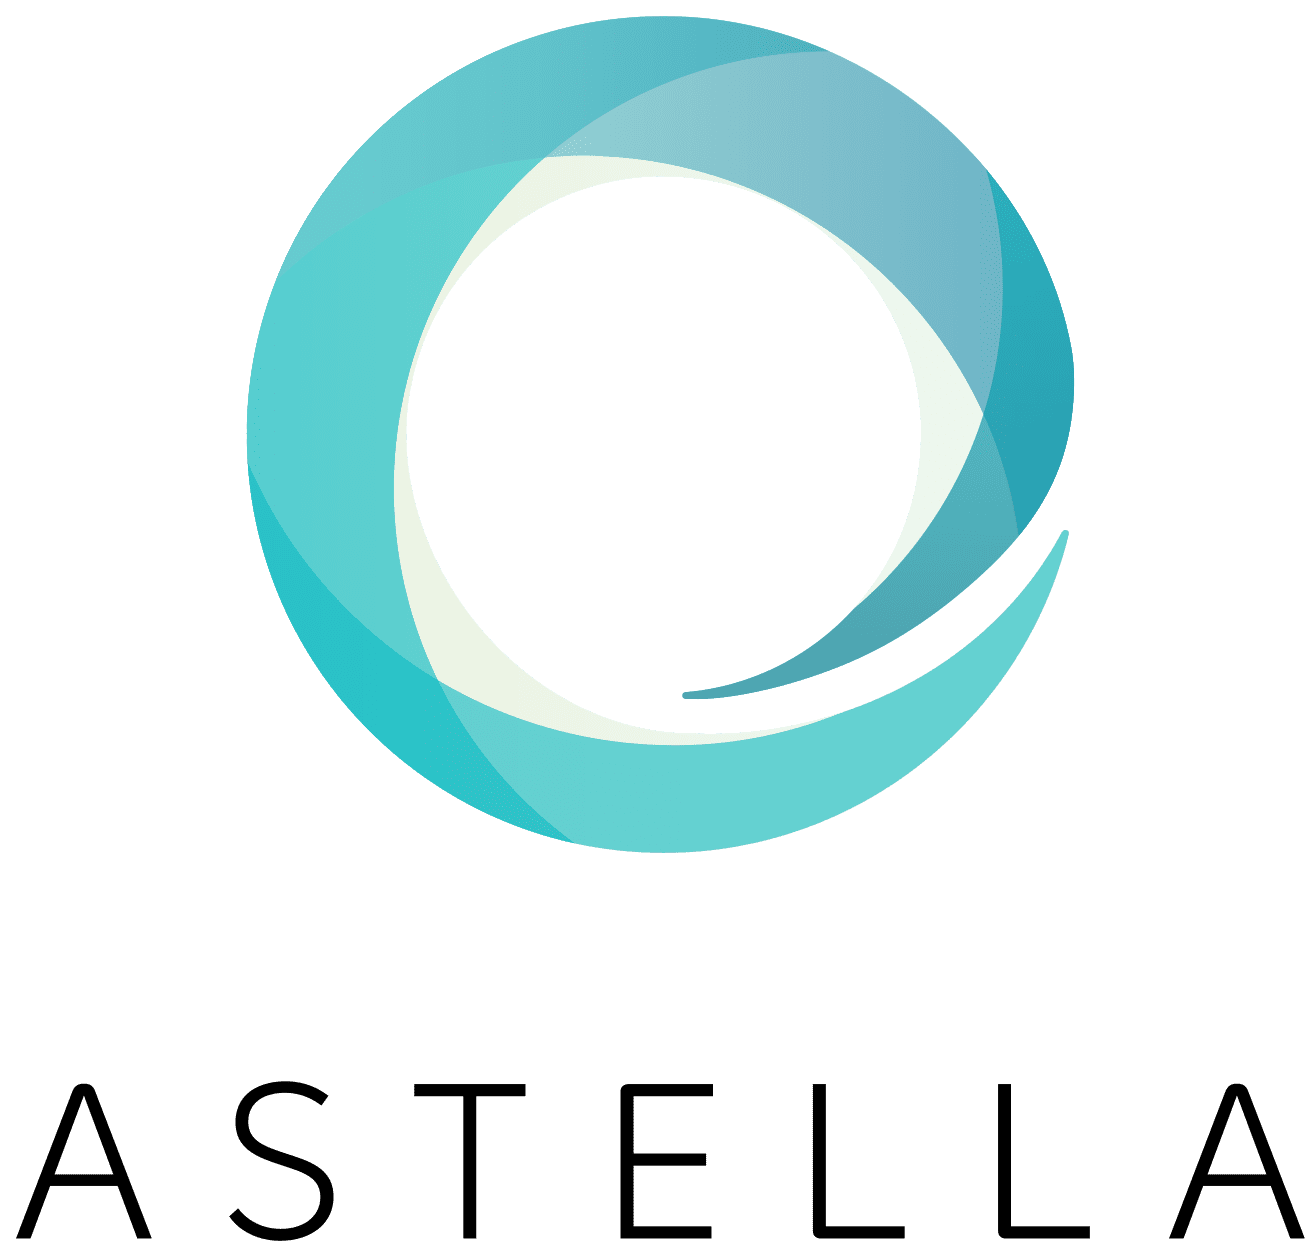 Astella Investimentos logo